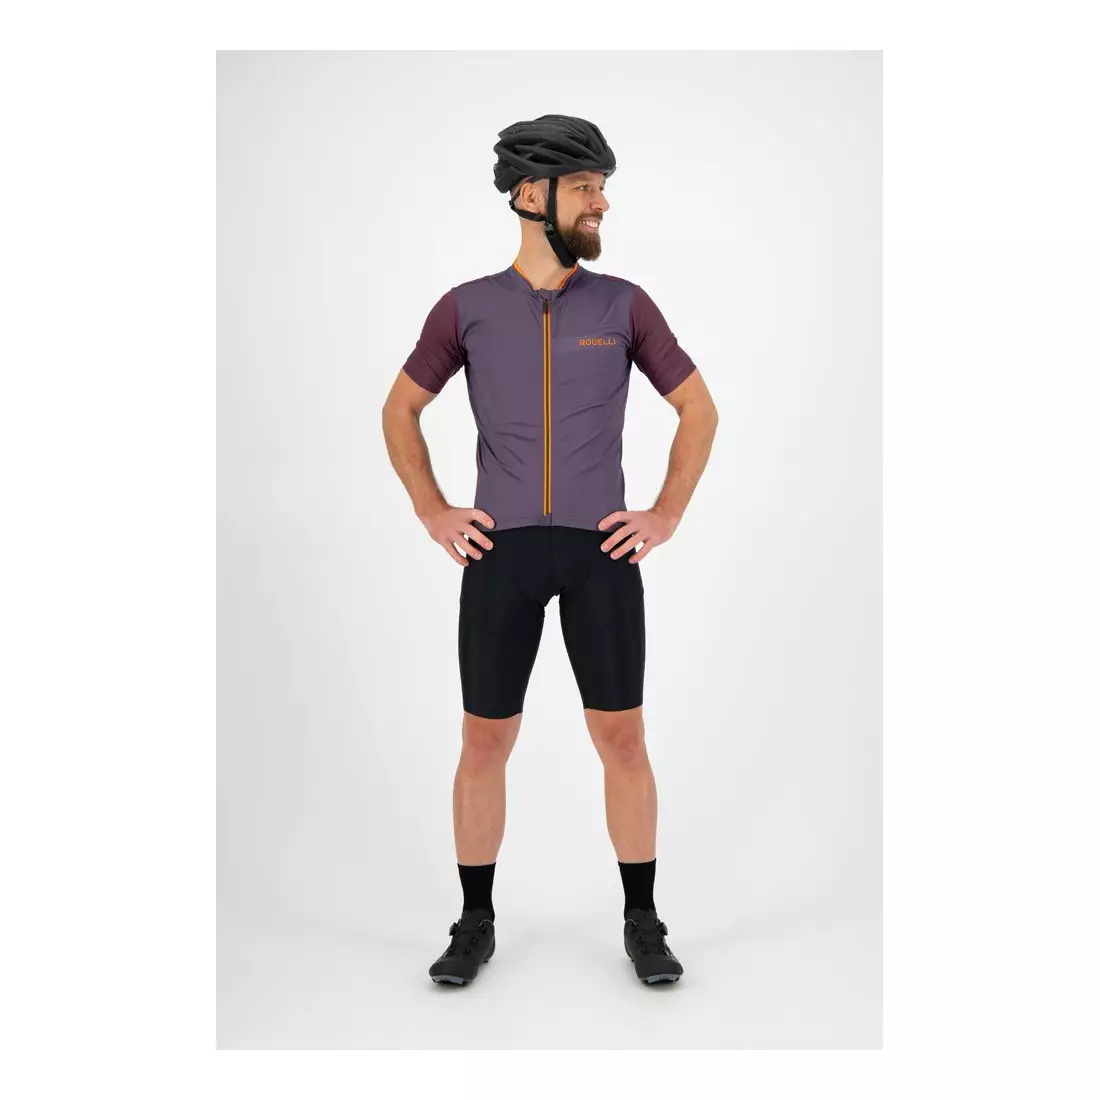 ROGELLI men's bicycle t-shirt MINIMAL purple